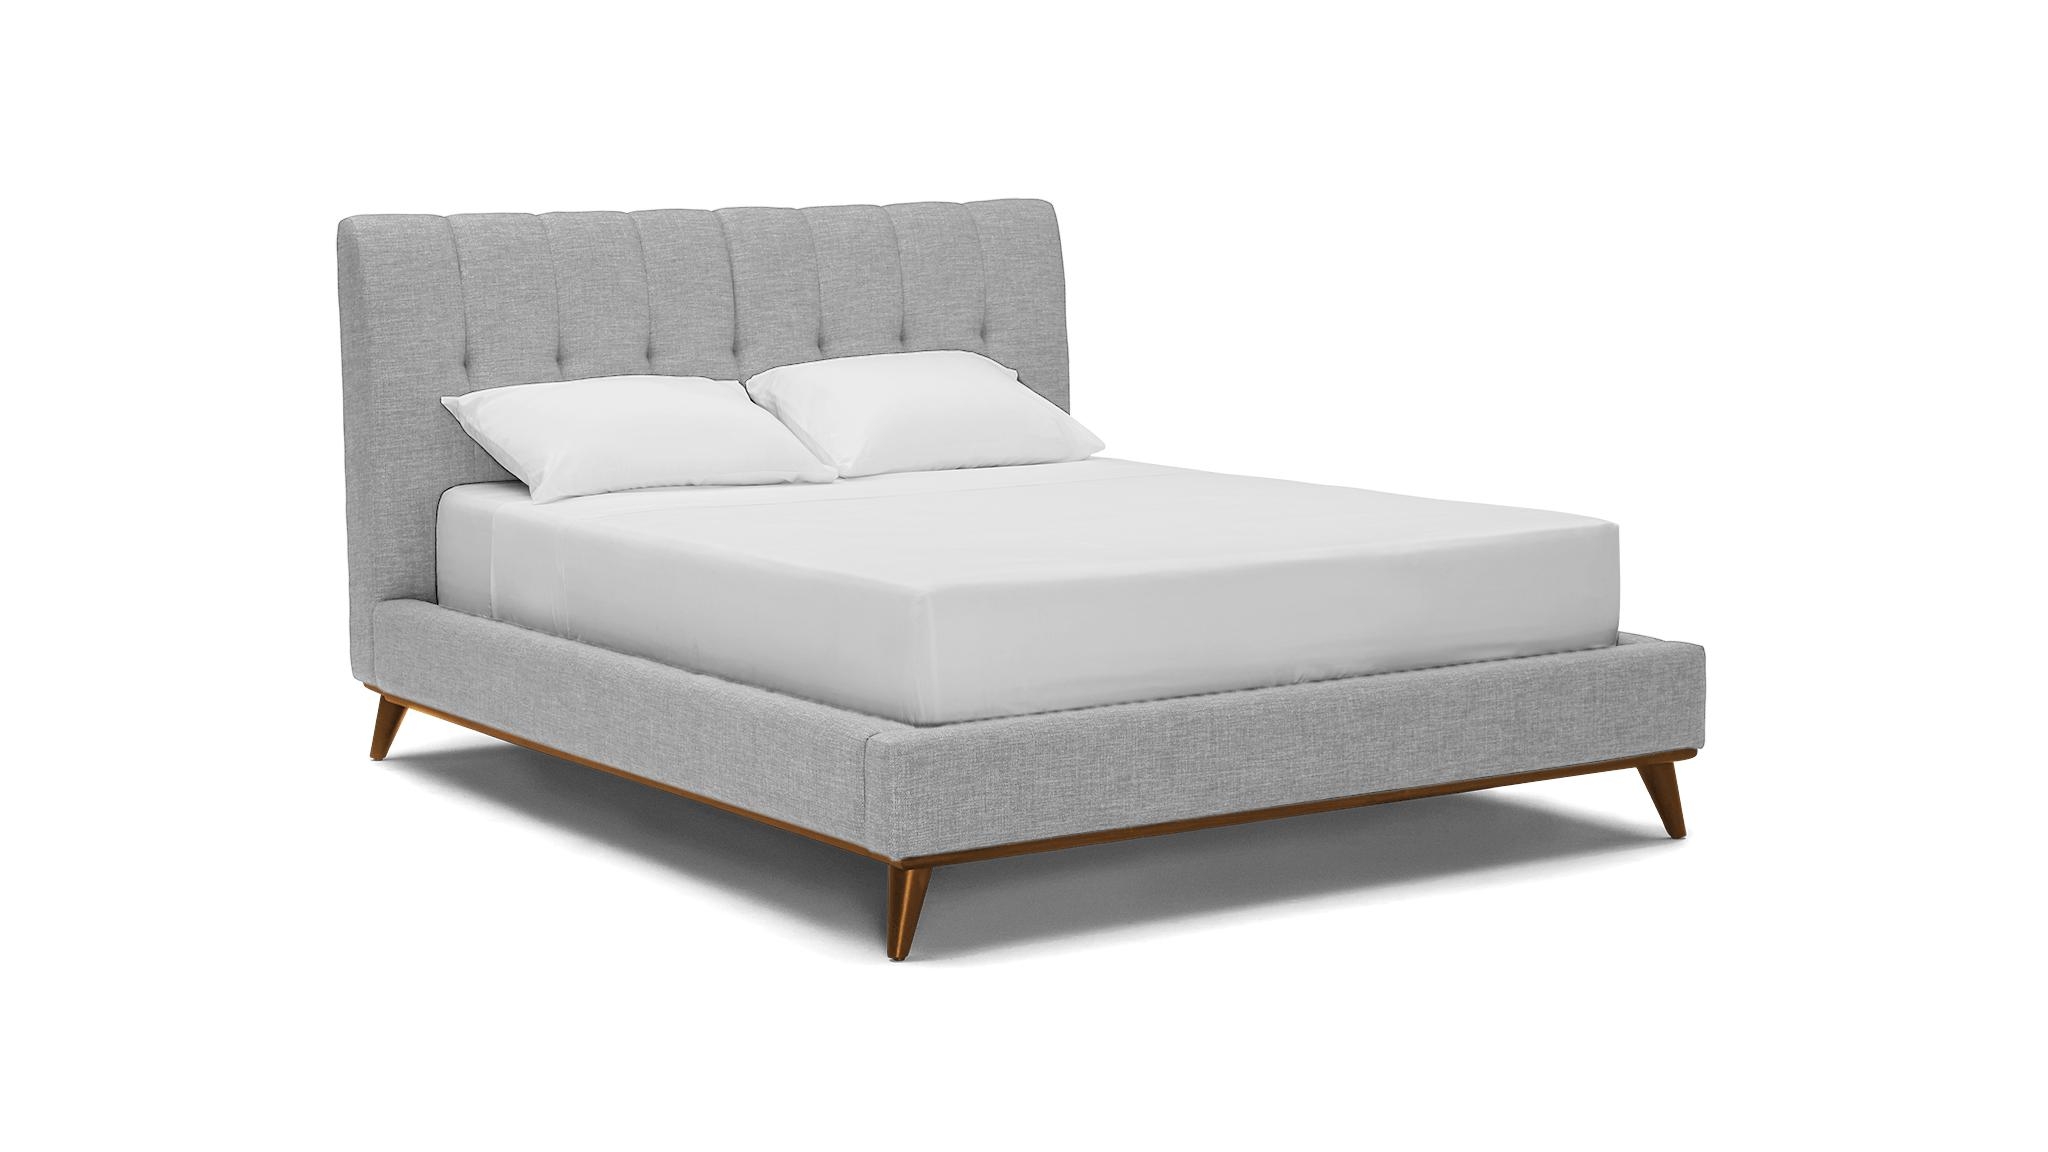 Gray Hughes Mid Century Modern Bed - Milo Dove - Mocha - Cal King - Image 1